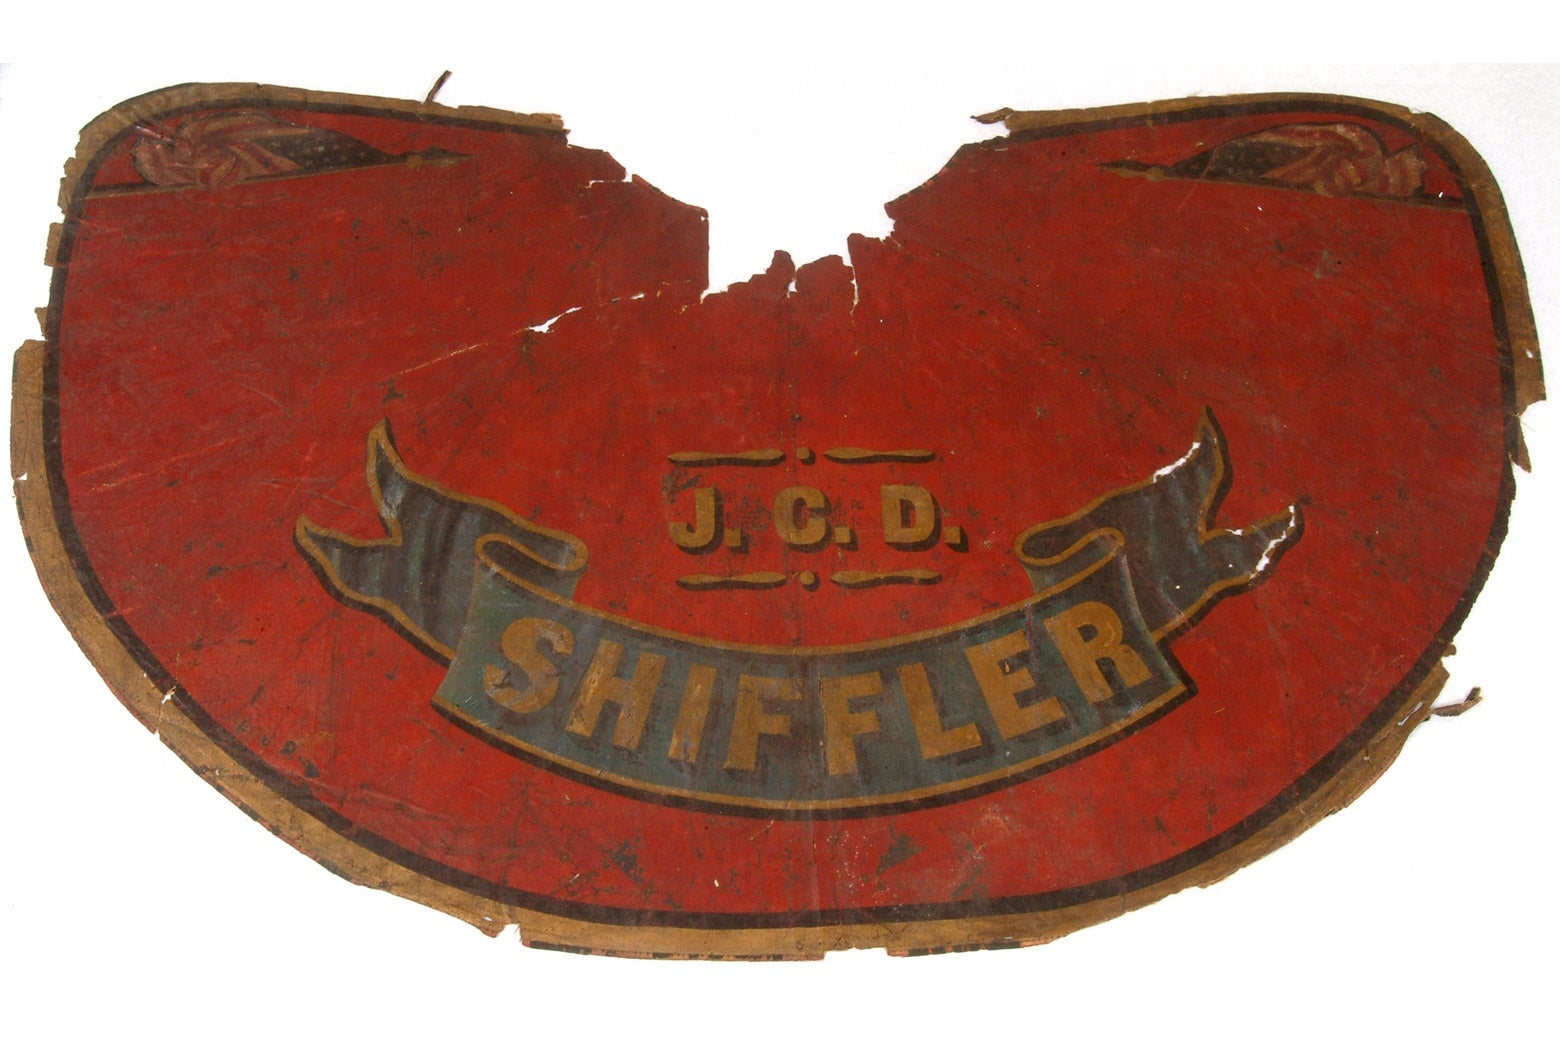 Nineteenth-century fireman's cape with "Shiffler" emblazoned on it.